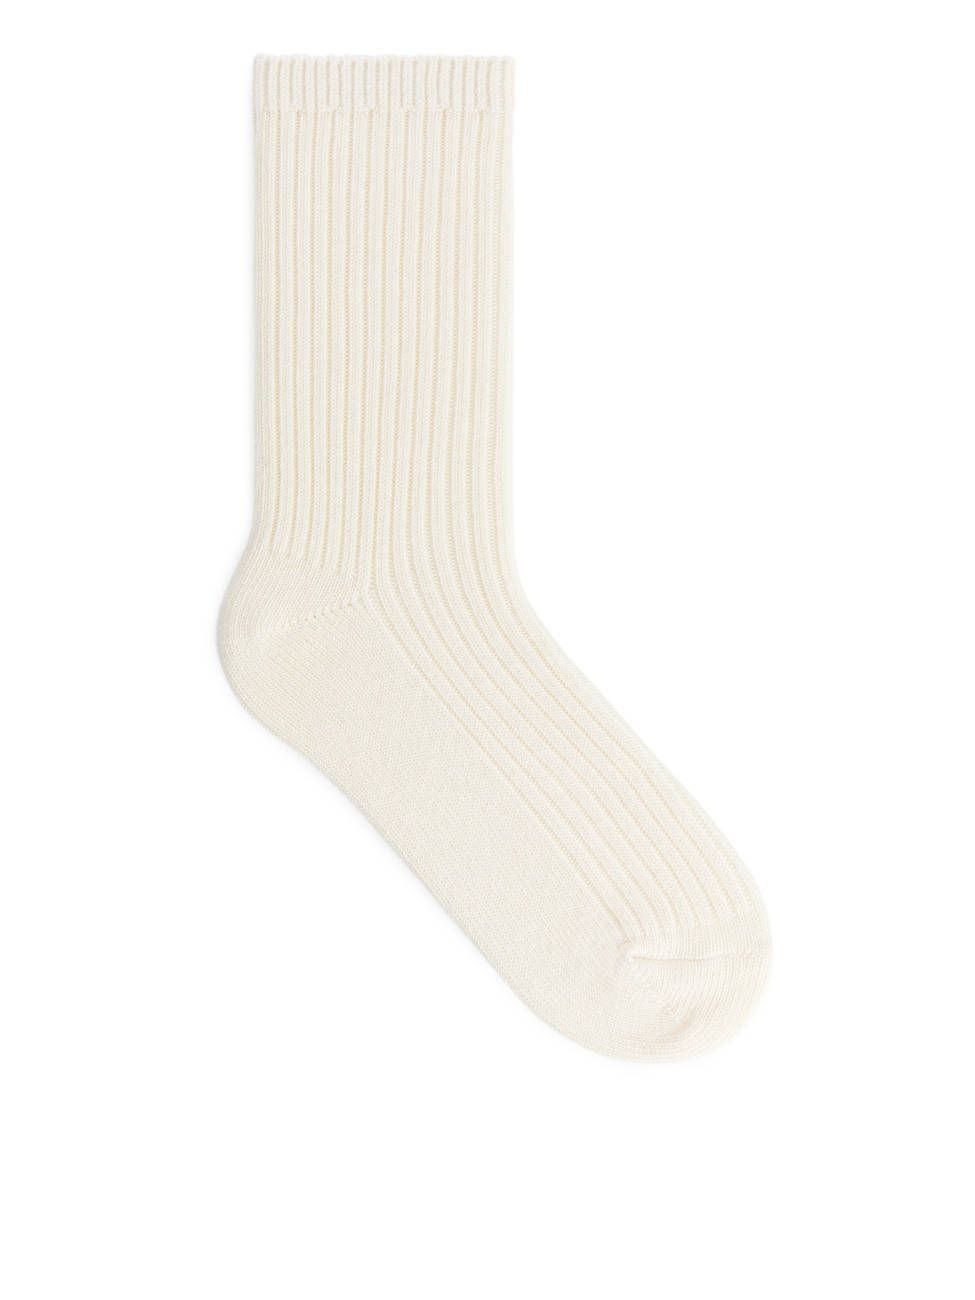 Chunky Cotton Rib Socks - Off White - Underwear & Loungewear - ARKET GB | ARKET